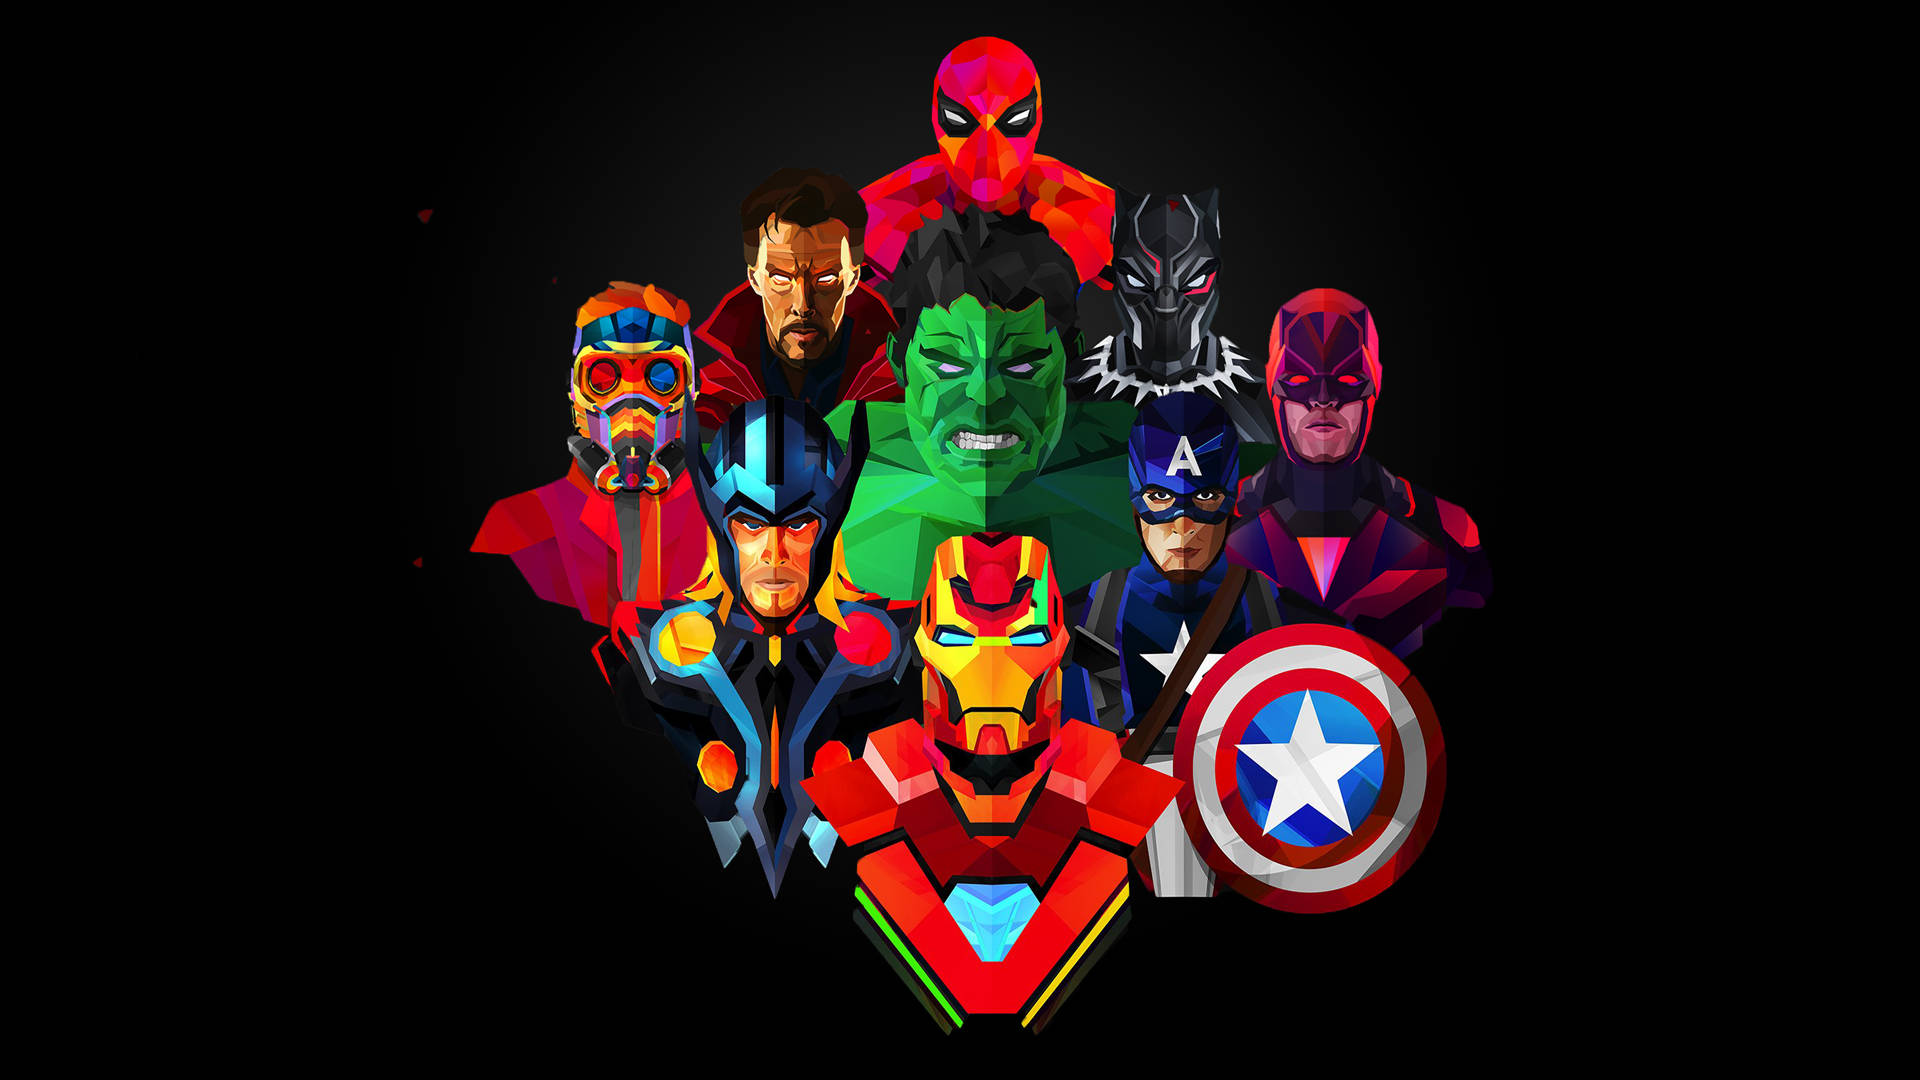 Download Polygon Art Avengers Wallpaper 